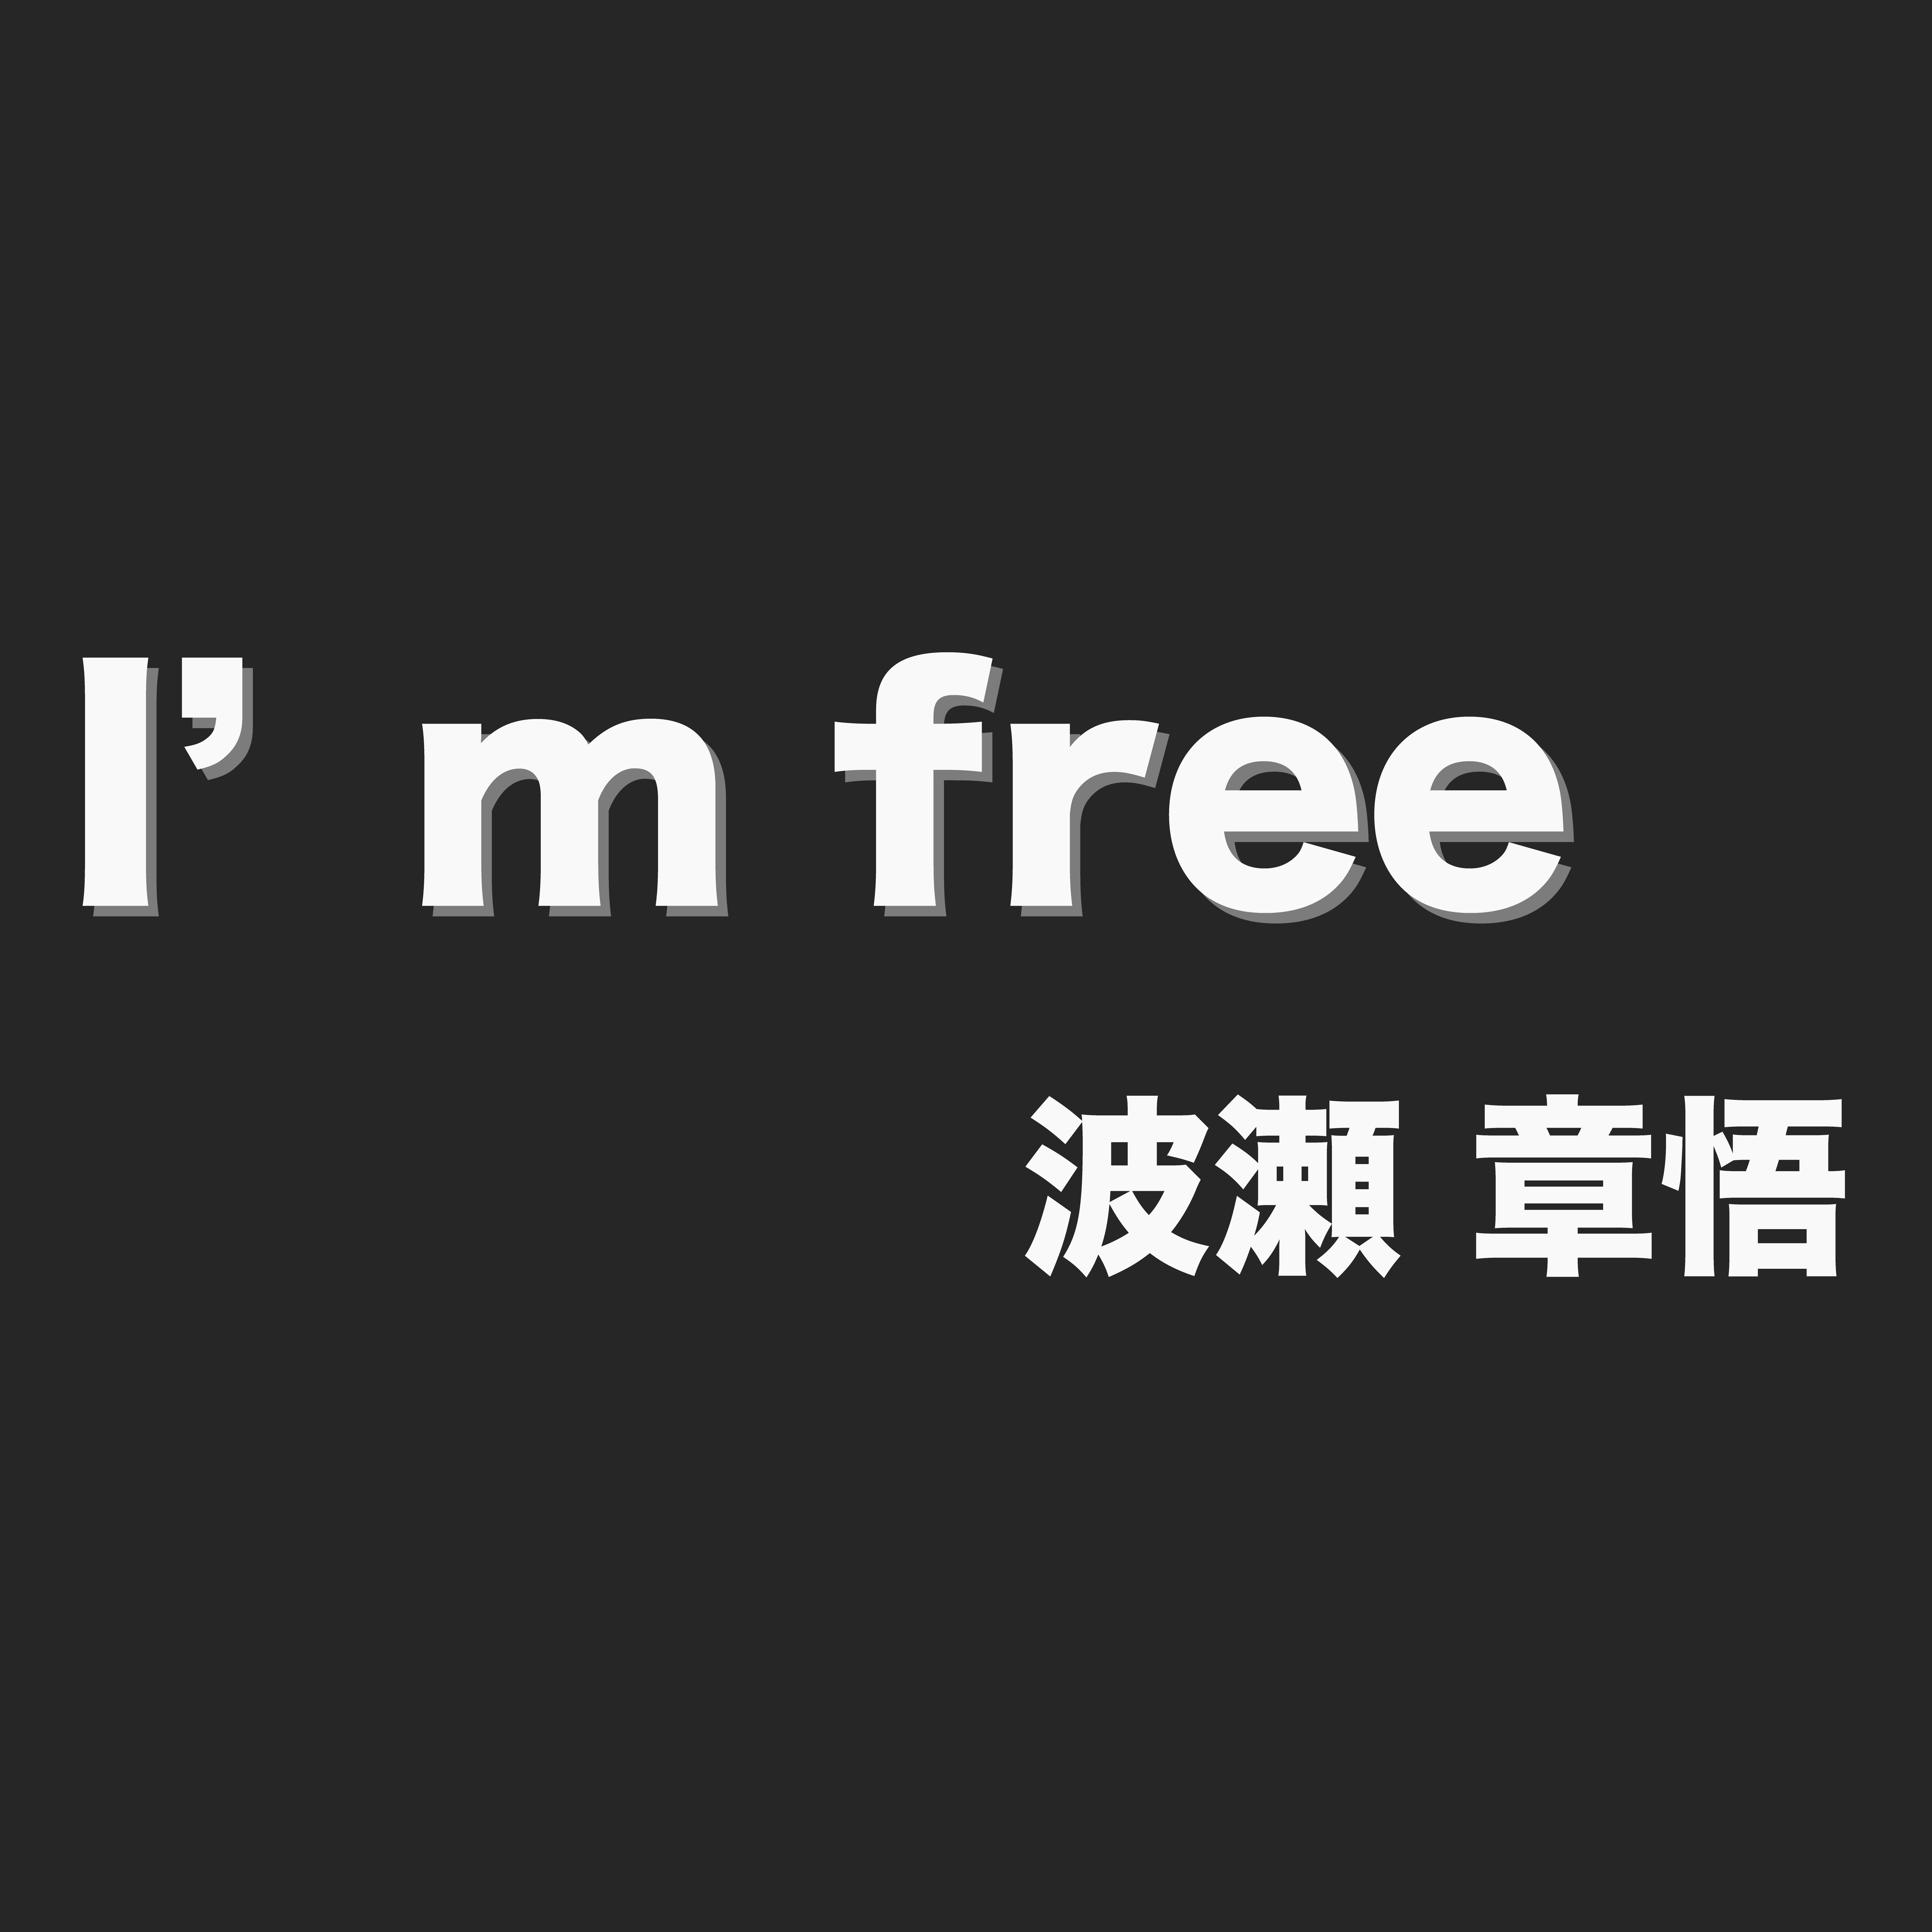 I’m freeジャケット写真